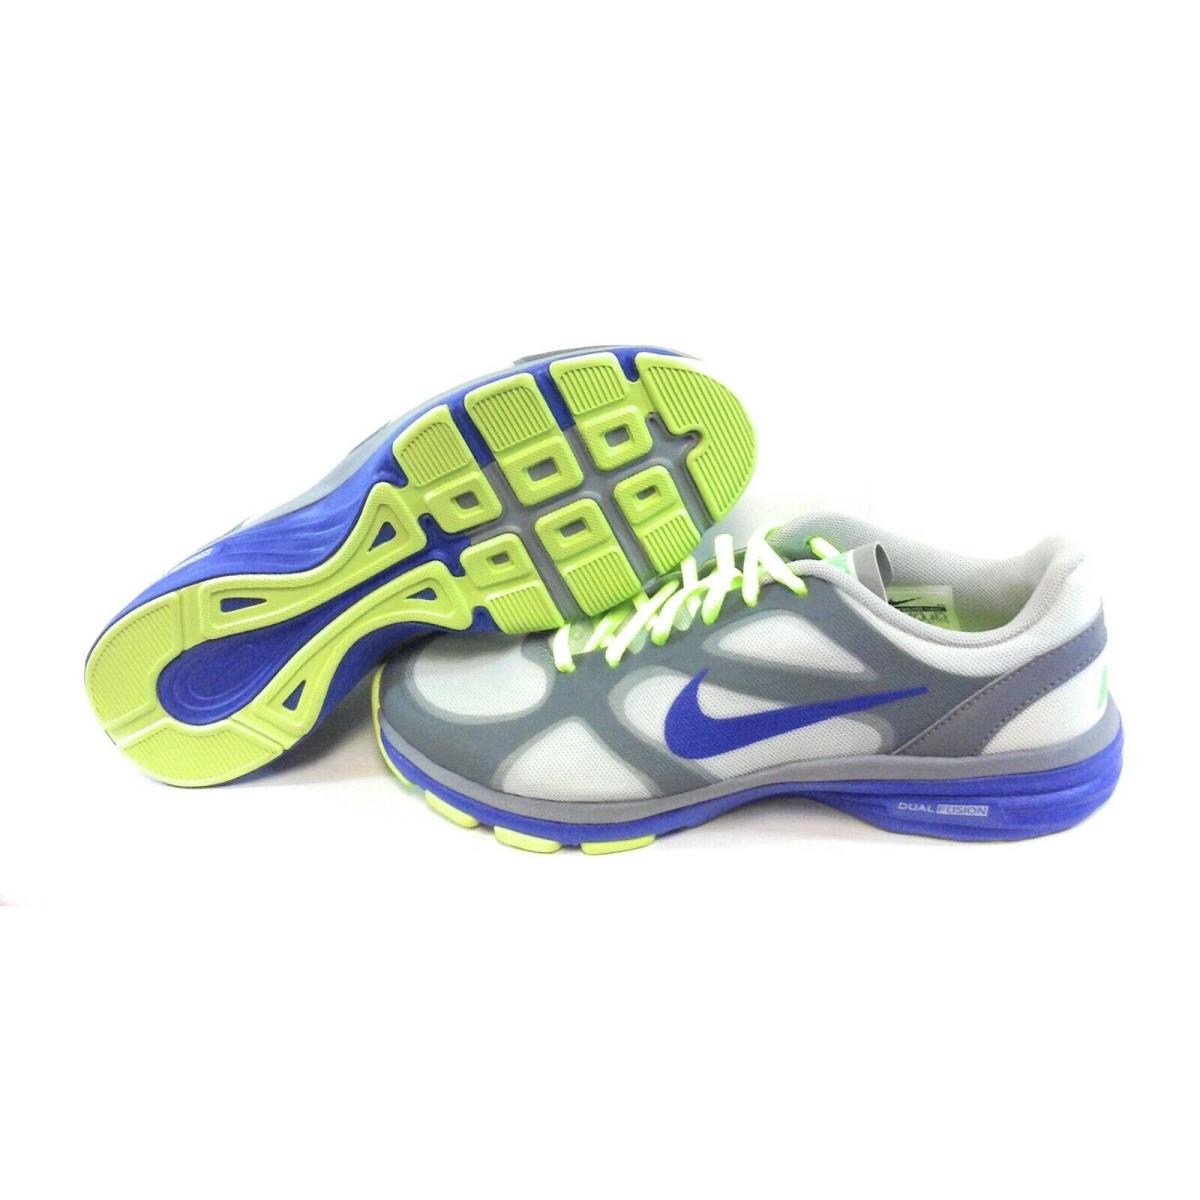 Womens Nike Dual Fusion Run TR 443837 011 Grey Volt Purple 2013 Sneakers Shoes - Grey